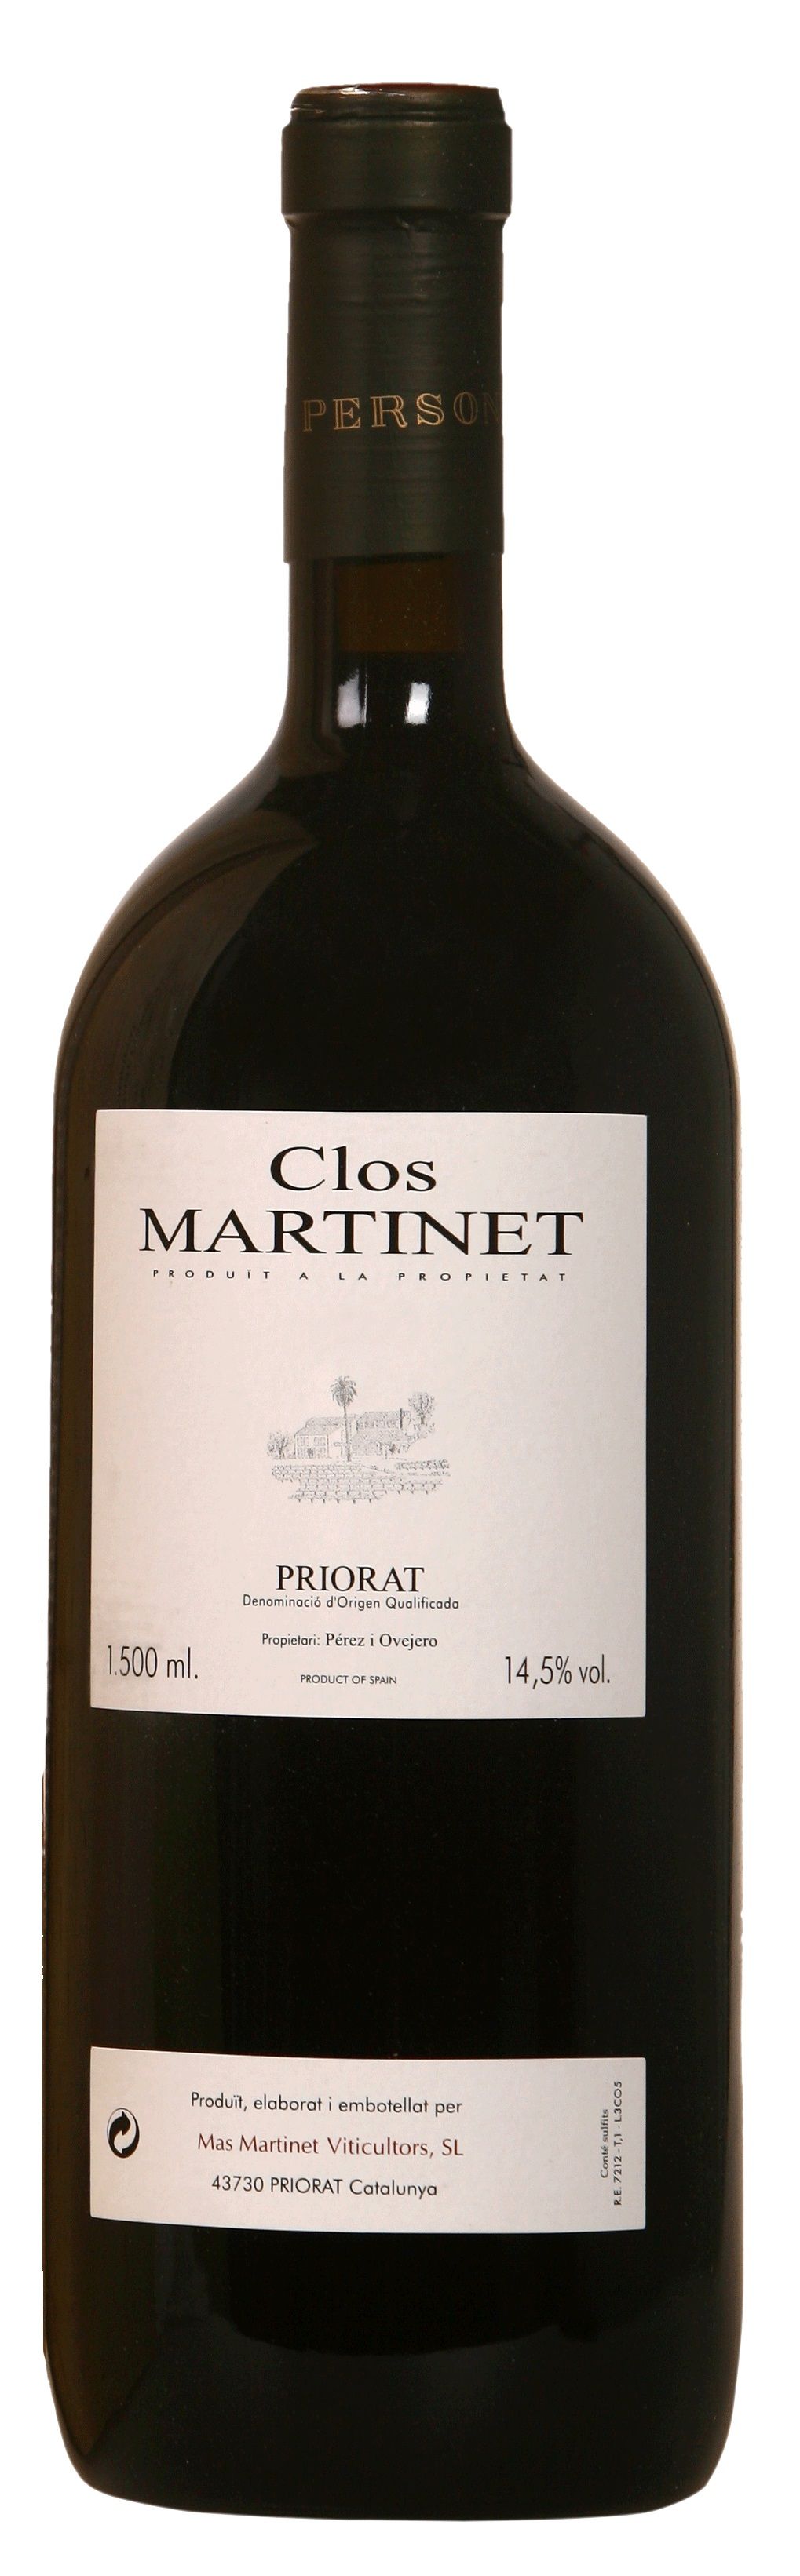 Mas Martinet, Clos Martinet, 2004